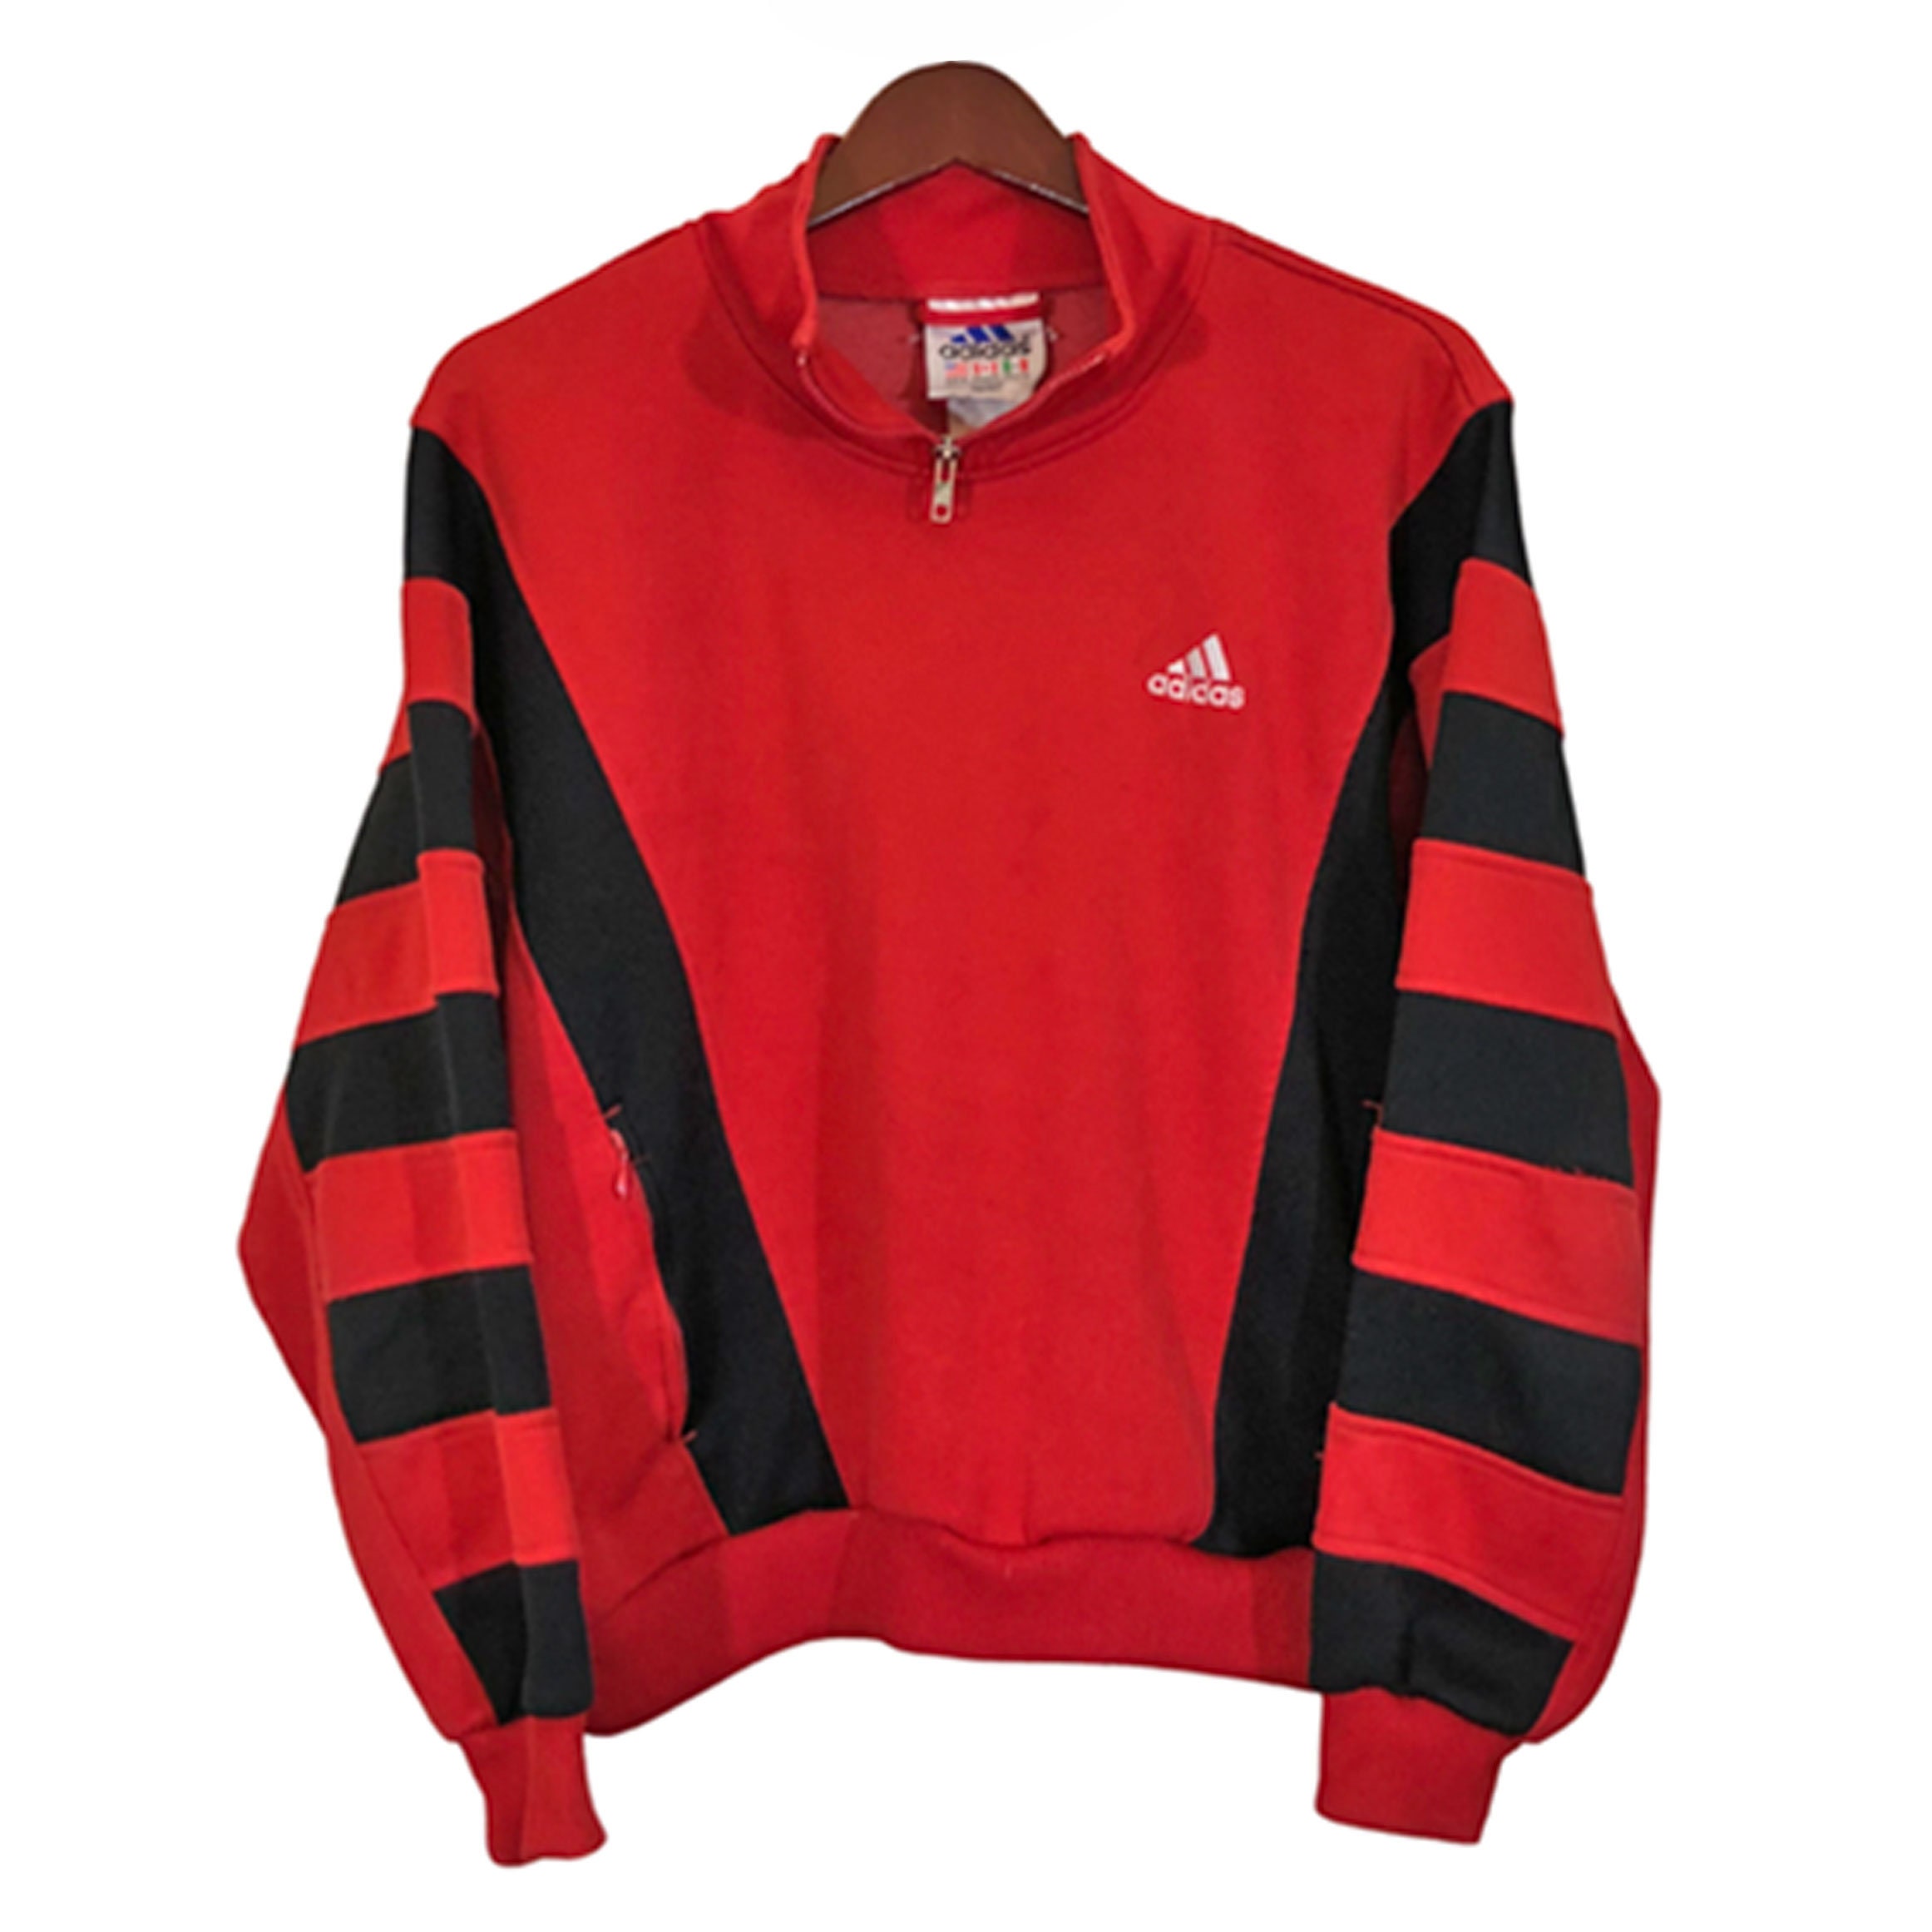 90s vintage adidas sweatshirt, red oversized slouchy vintage